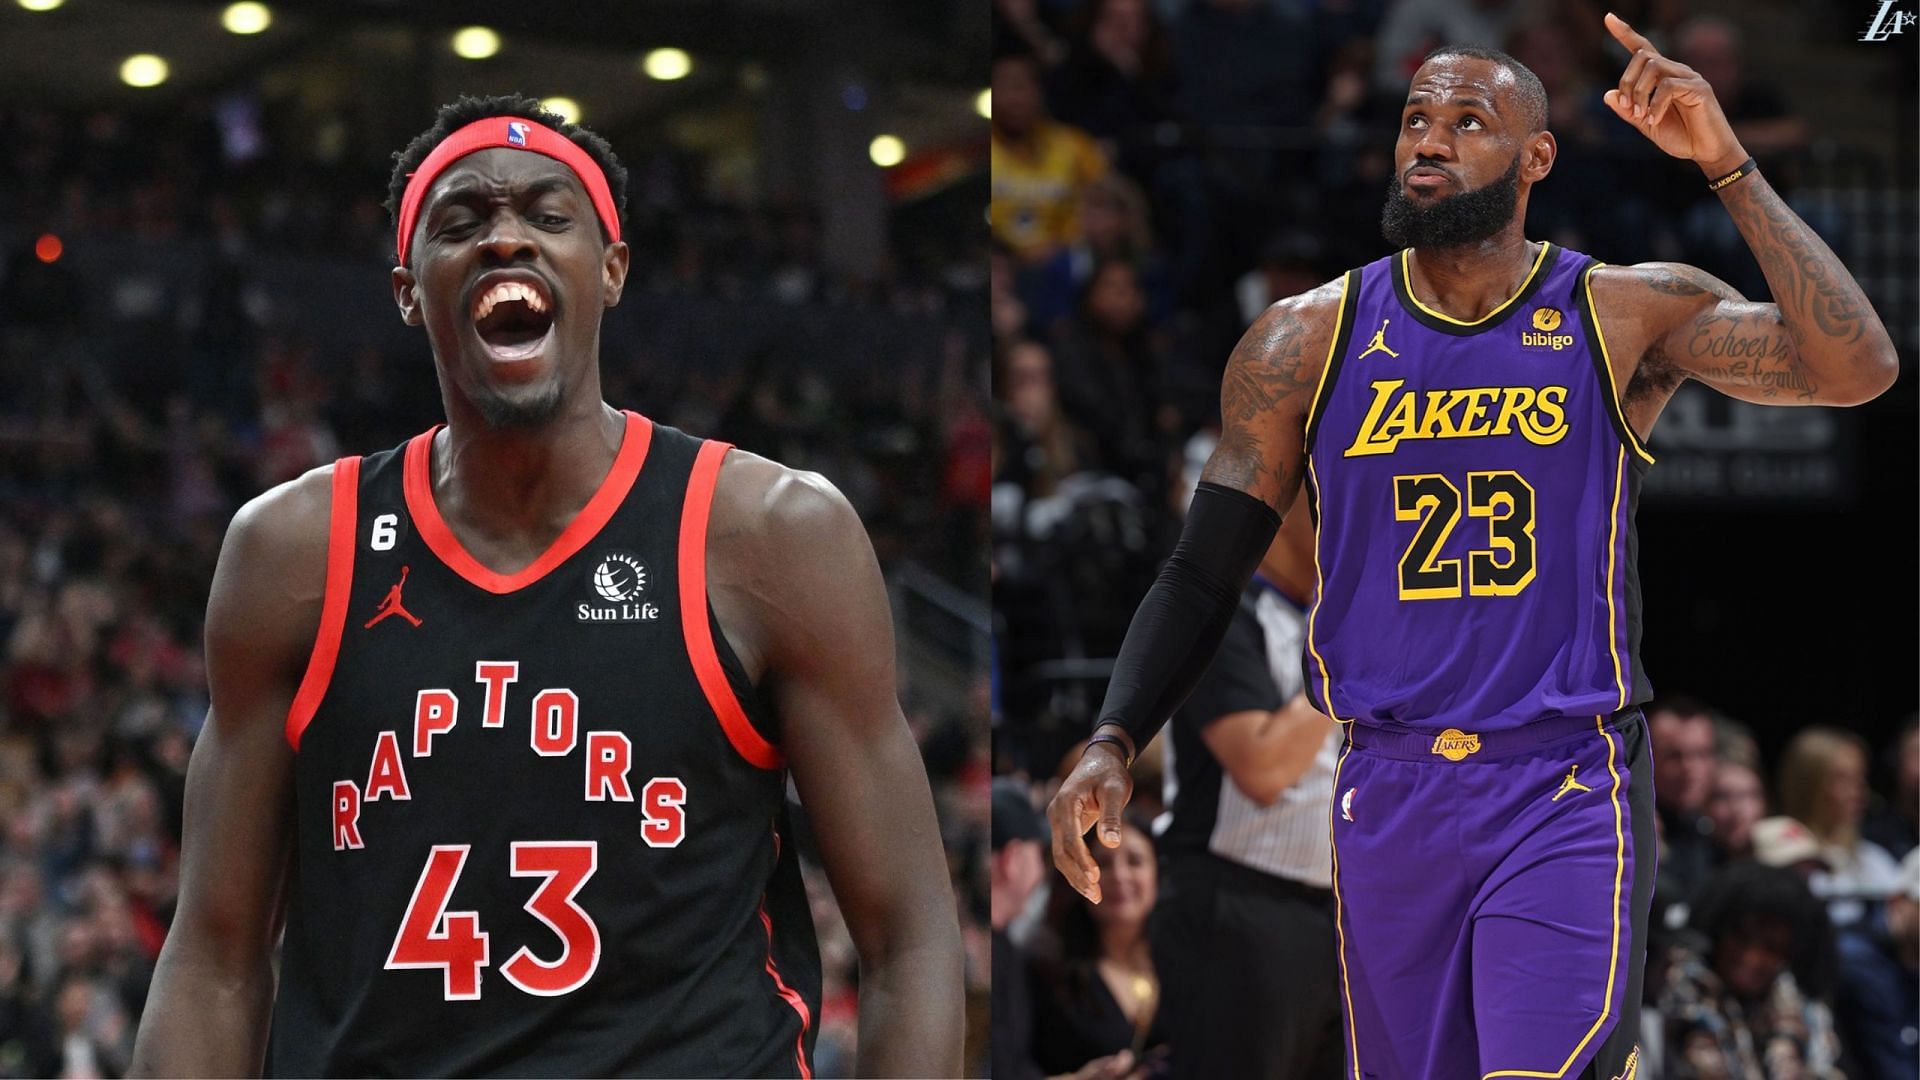 Toronto Raptors vs. LA Lakers starting lineups and depth chart Jan. 9